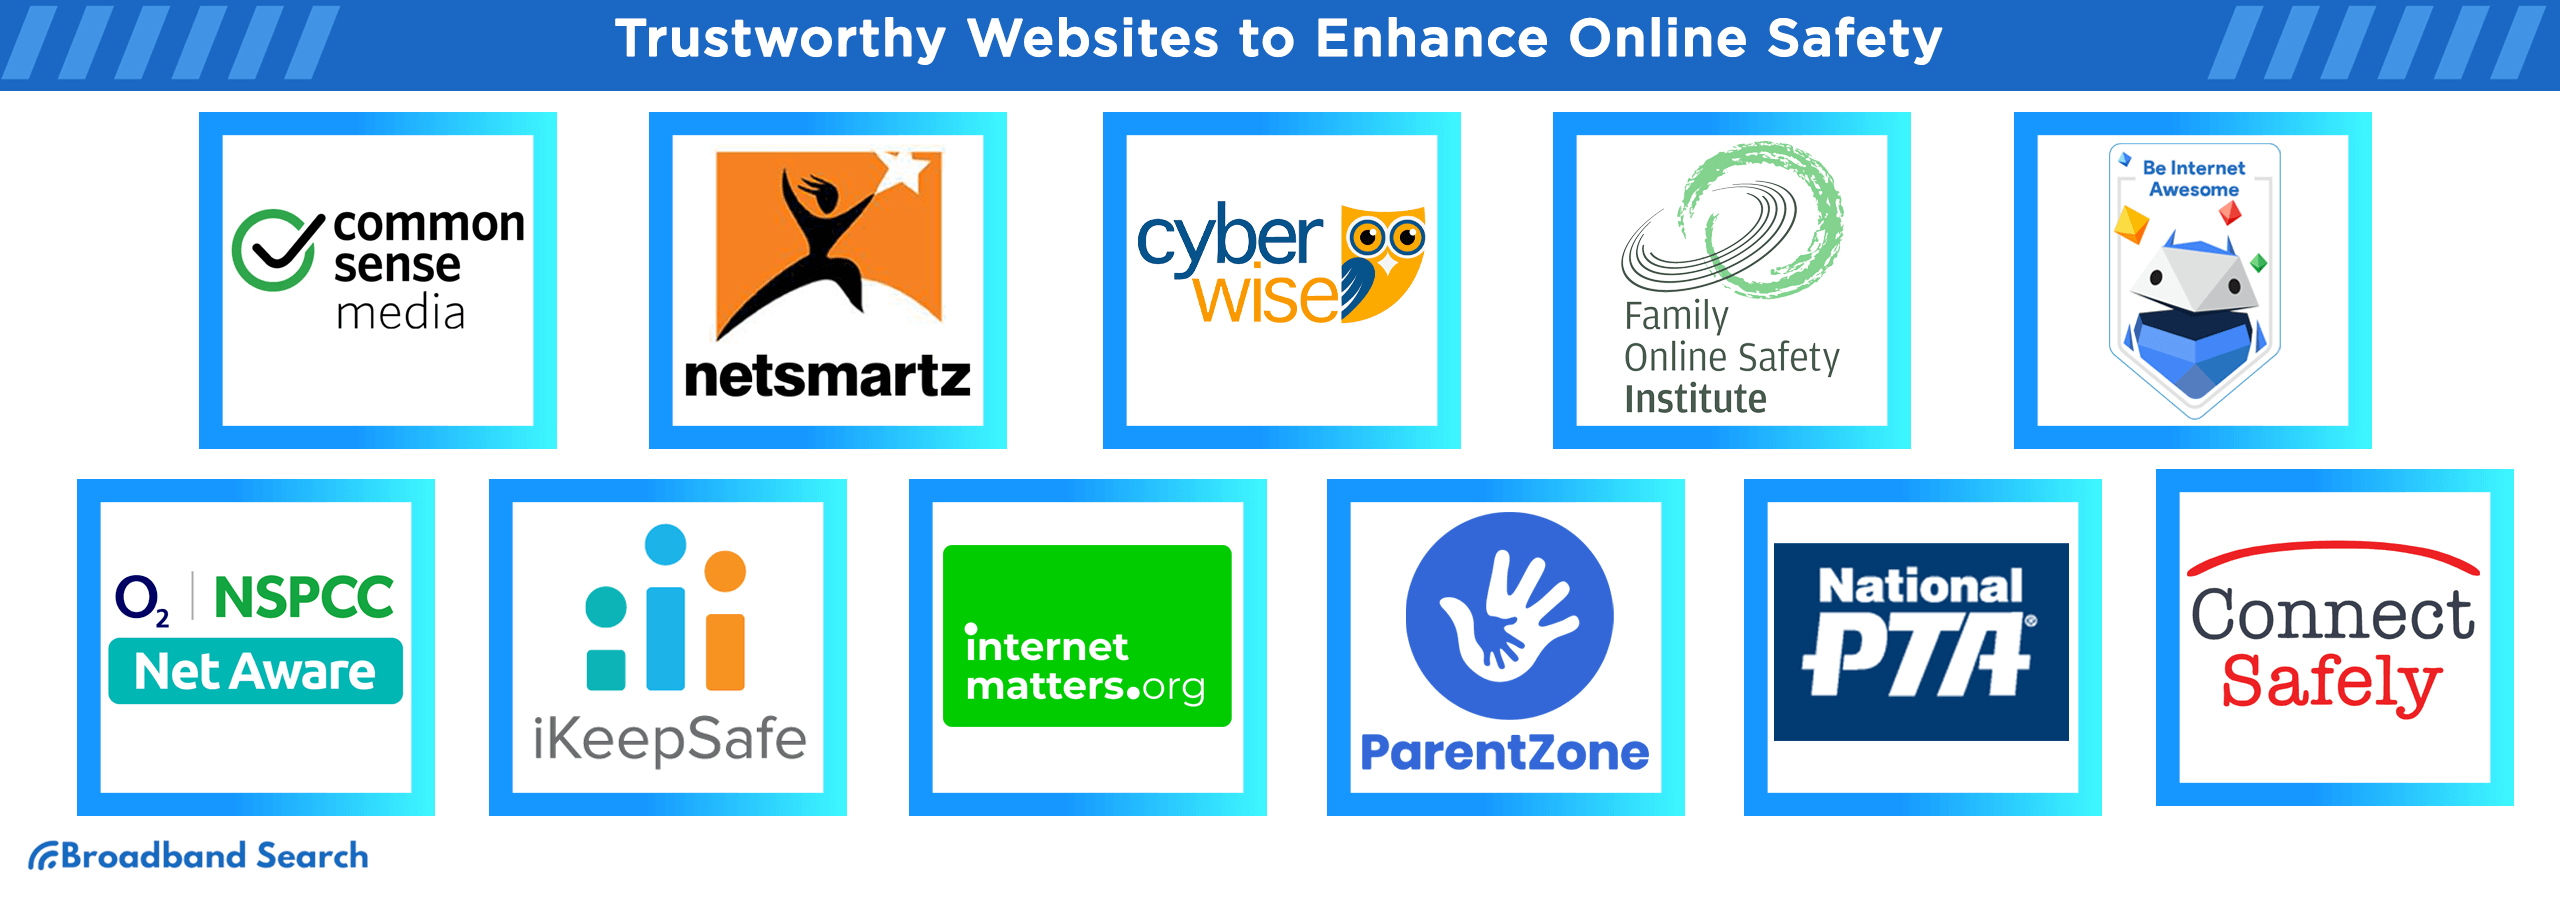 List of trustworthy websites to enhance online safety